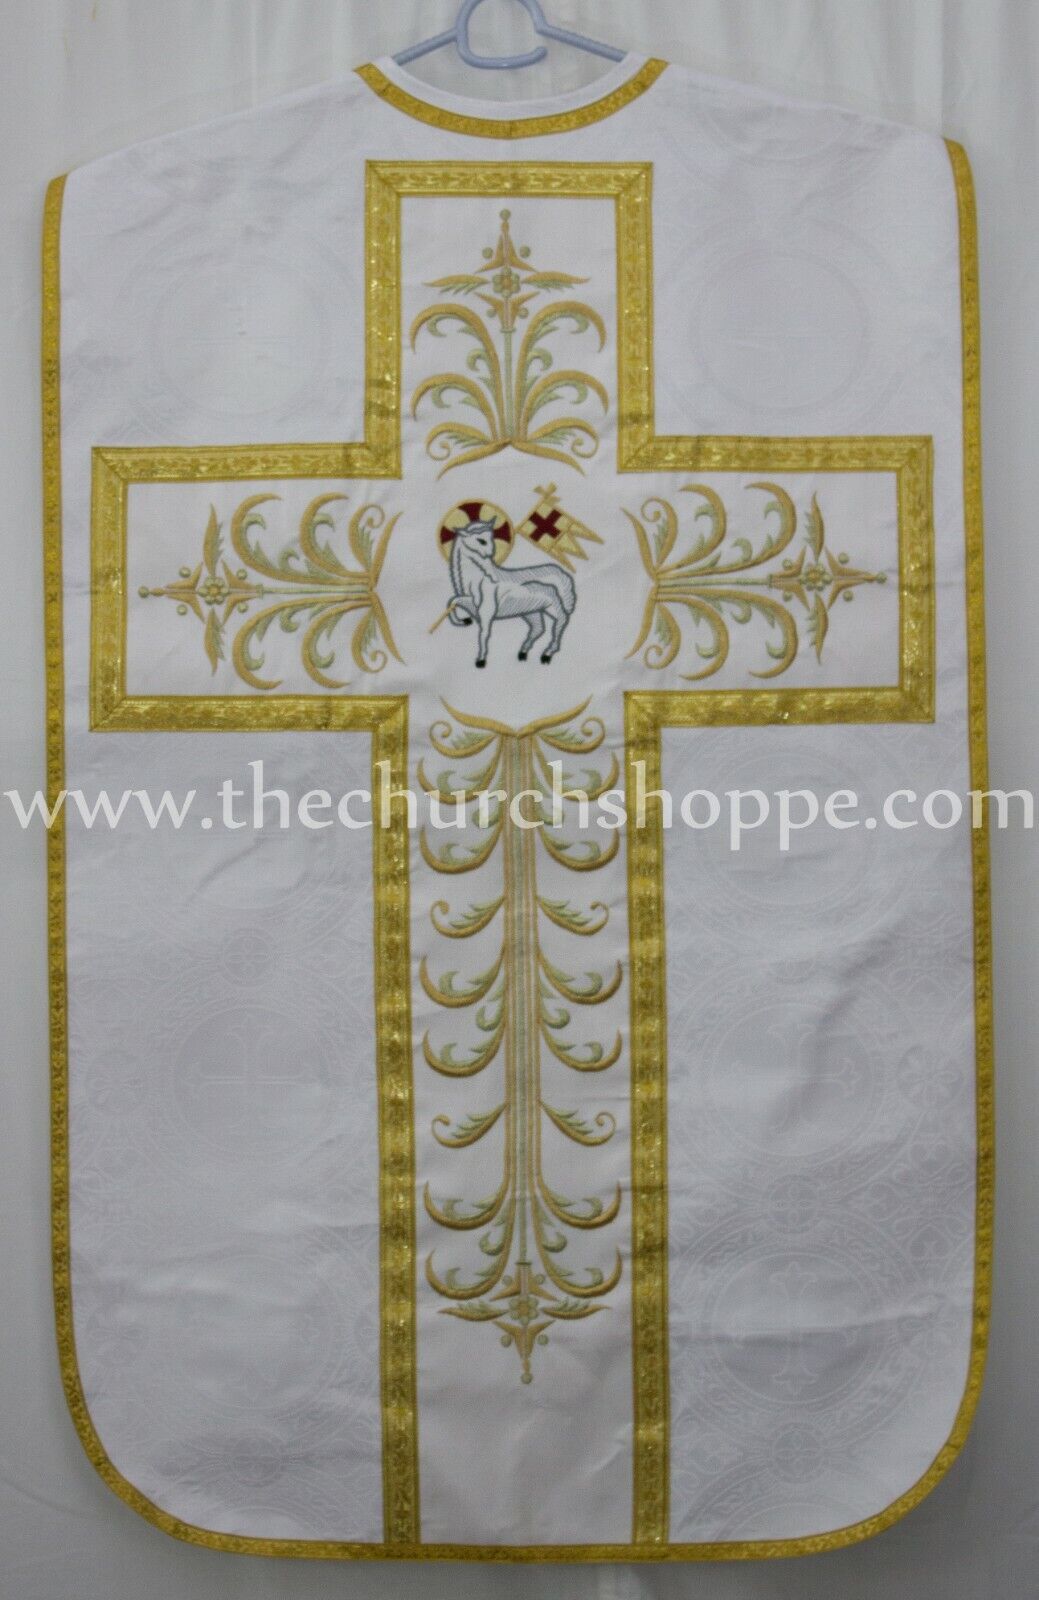 White Roman Chasuble Fiddleback Vestment 5pc set,AGNUS DEI embroidery